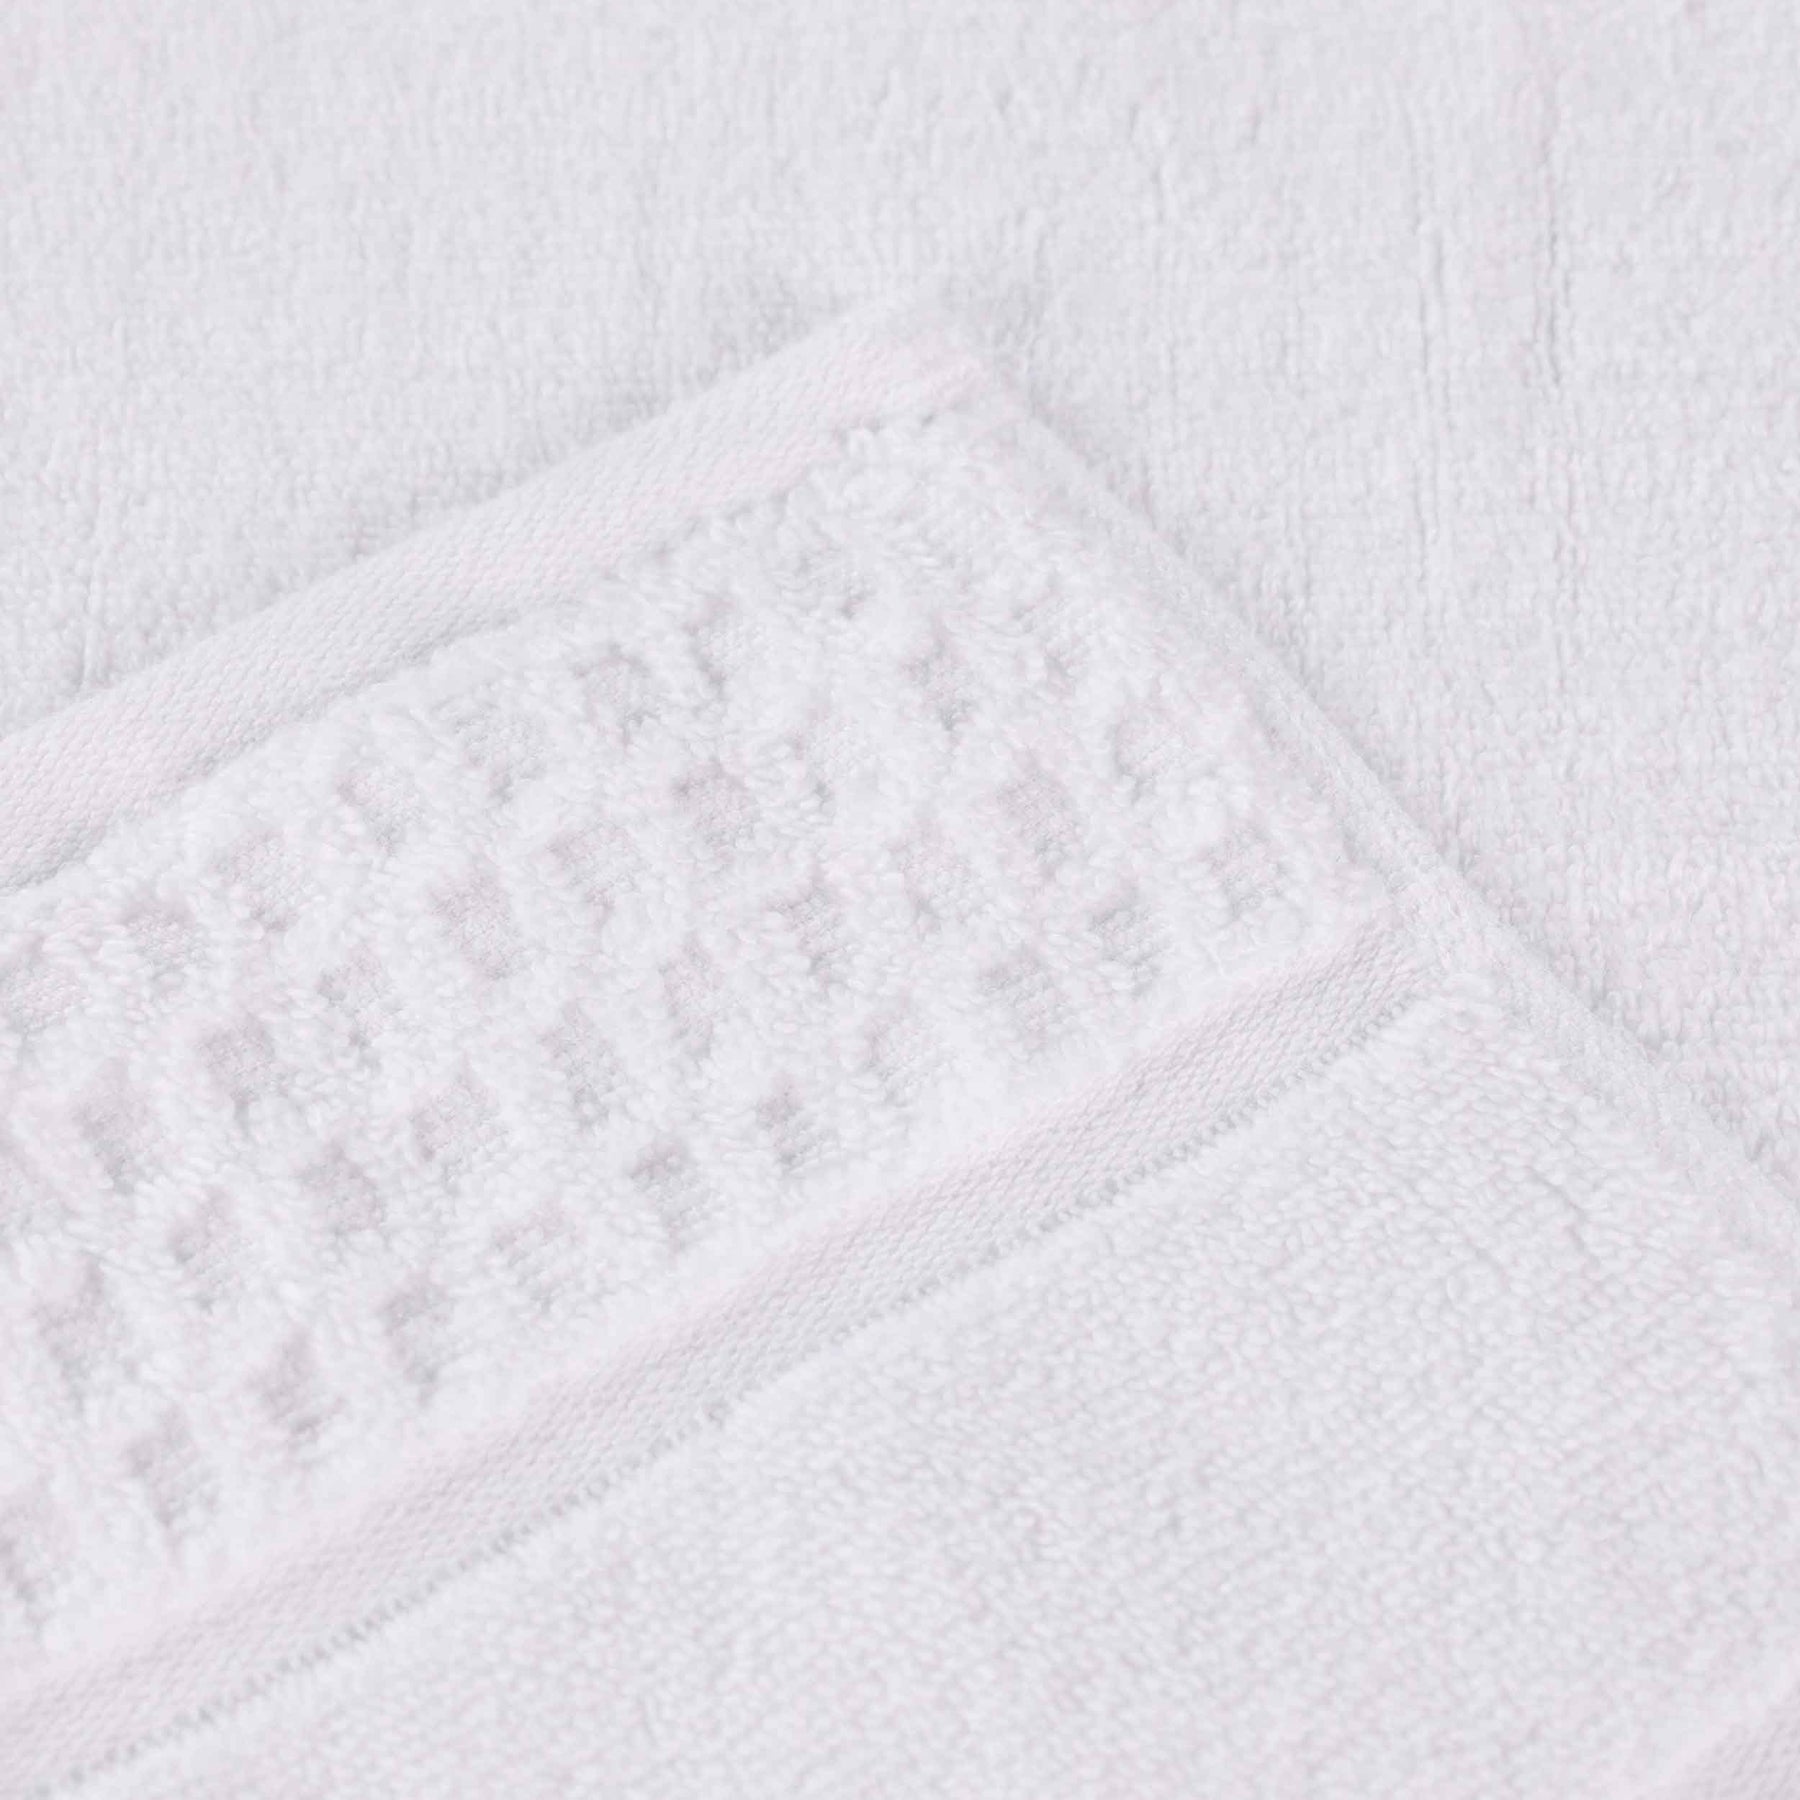 Zero Twist Cotton Waffle Honeycomb Plush Soft Bath Sheet - White